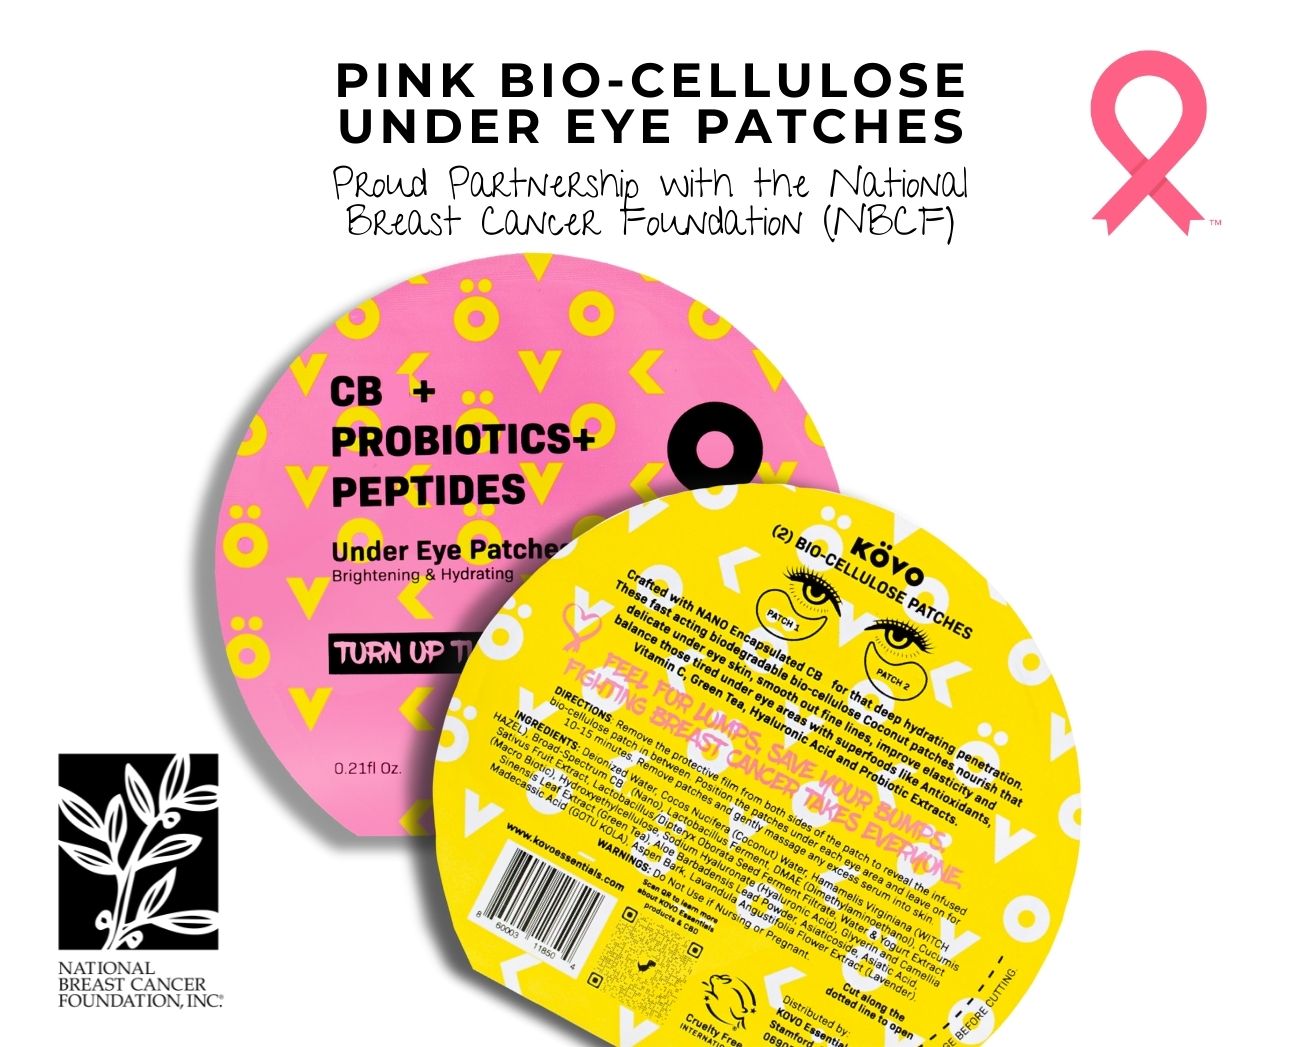 PINK Bio-Cellulose Under Eye Patches